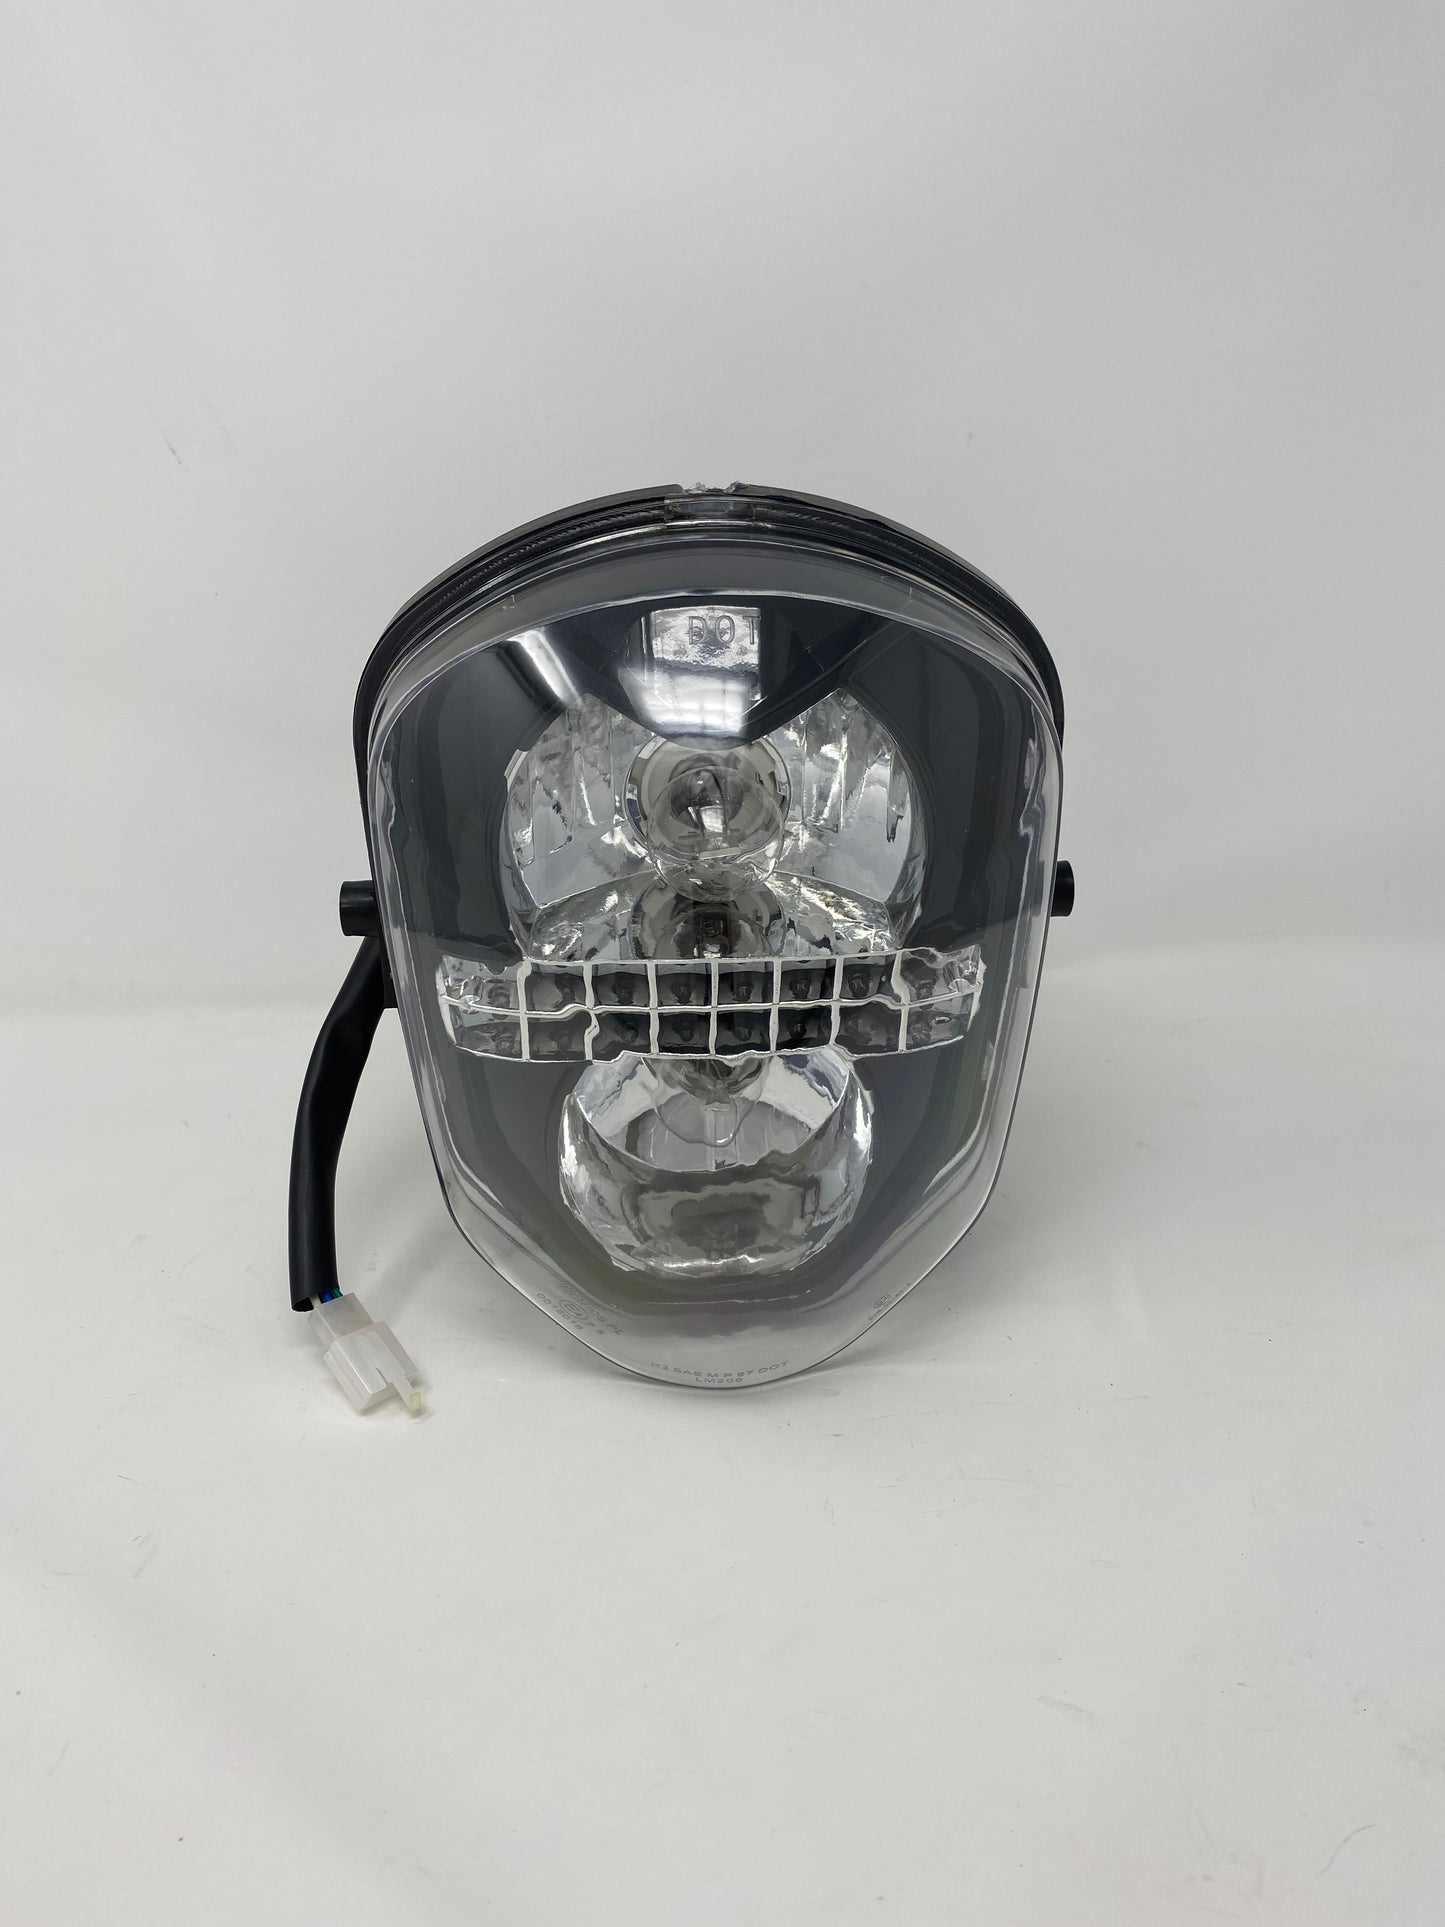 BD125-8 headlight for sale. Buy headlight for Venom Ducati clone.